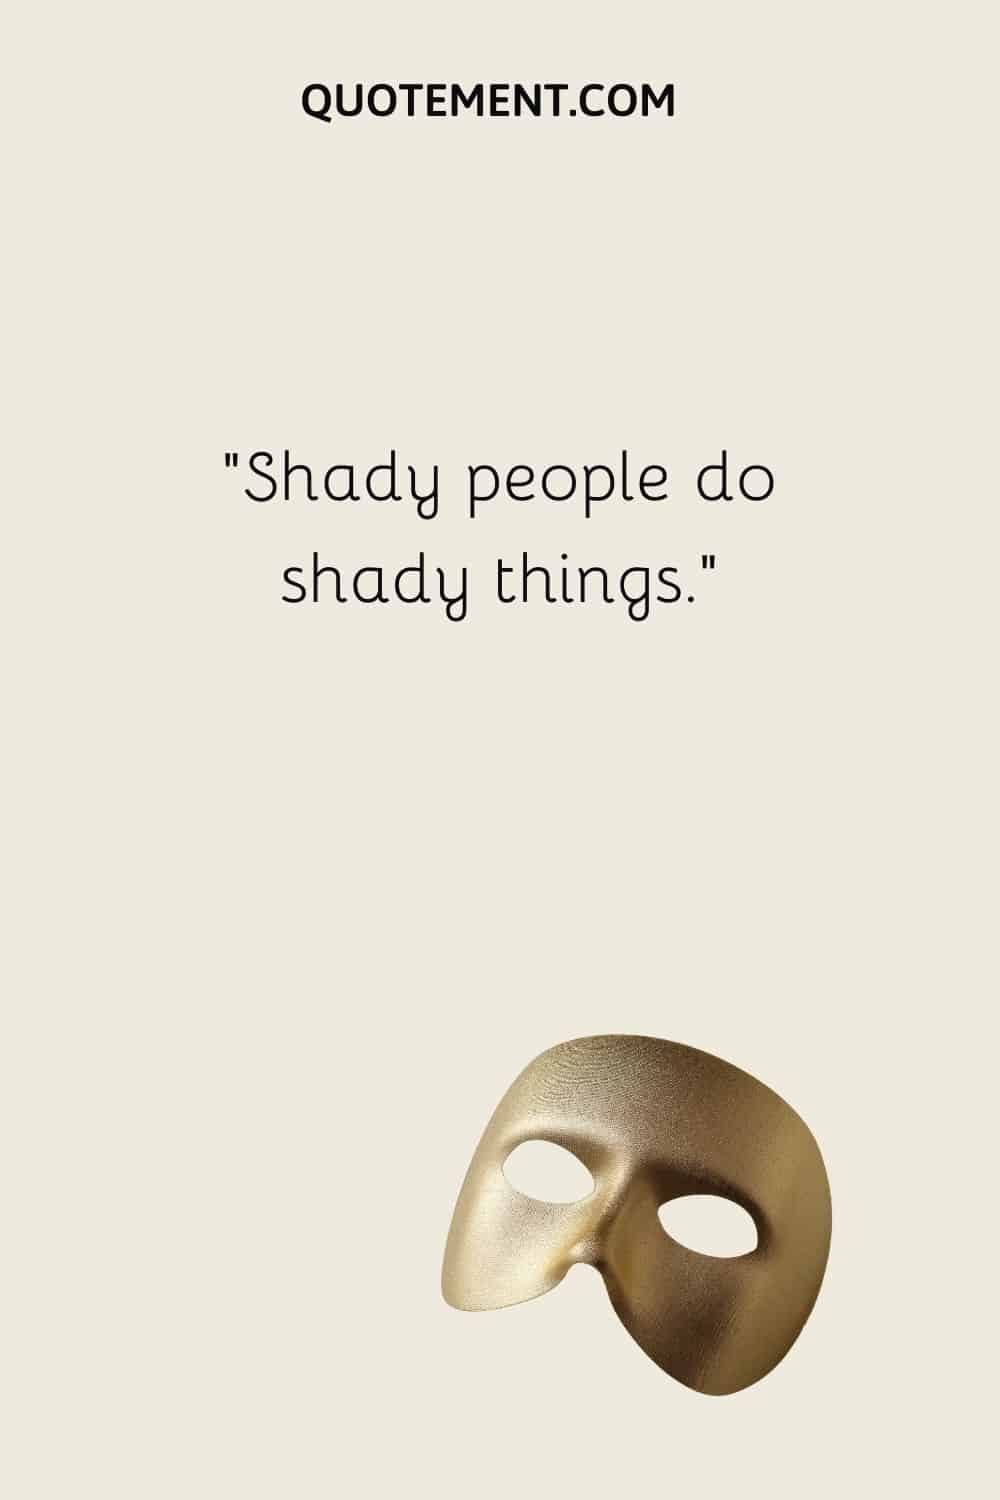 Shady people do shady things